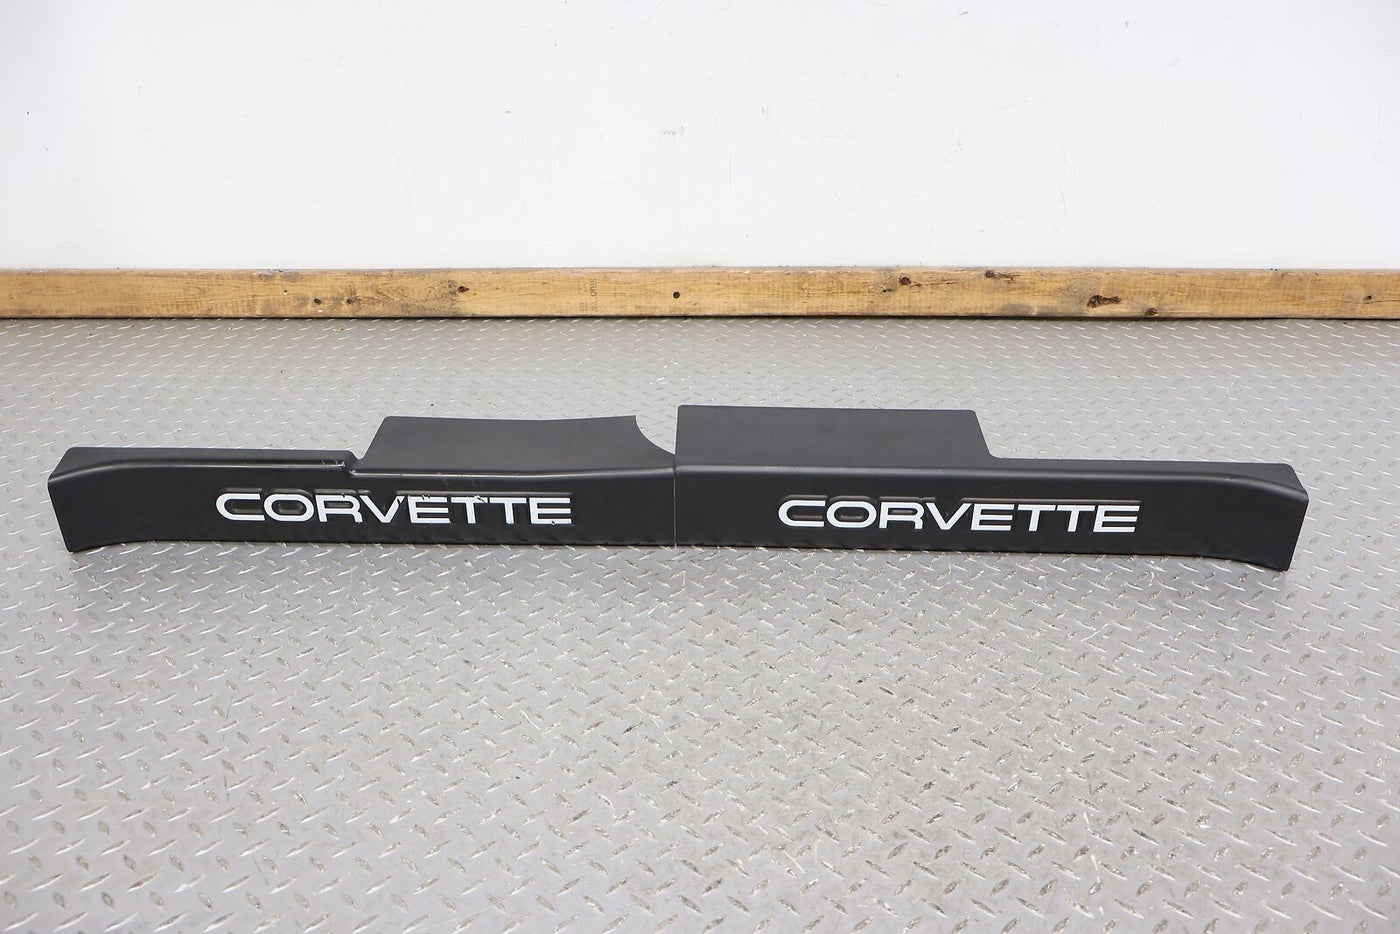 90-93 Chevy C4 Corvette Pair LH&RH Door Sill Entry Trim Plates (Black) OEM